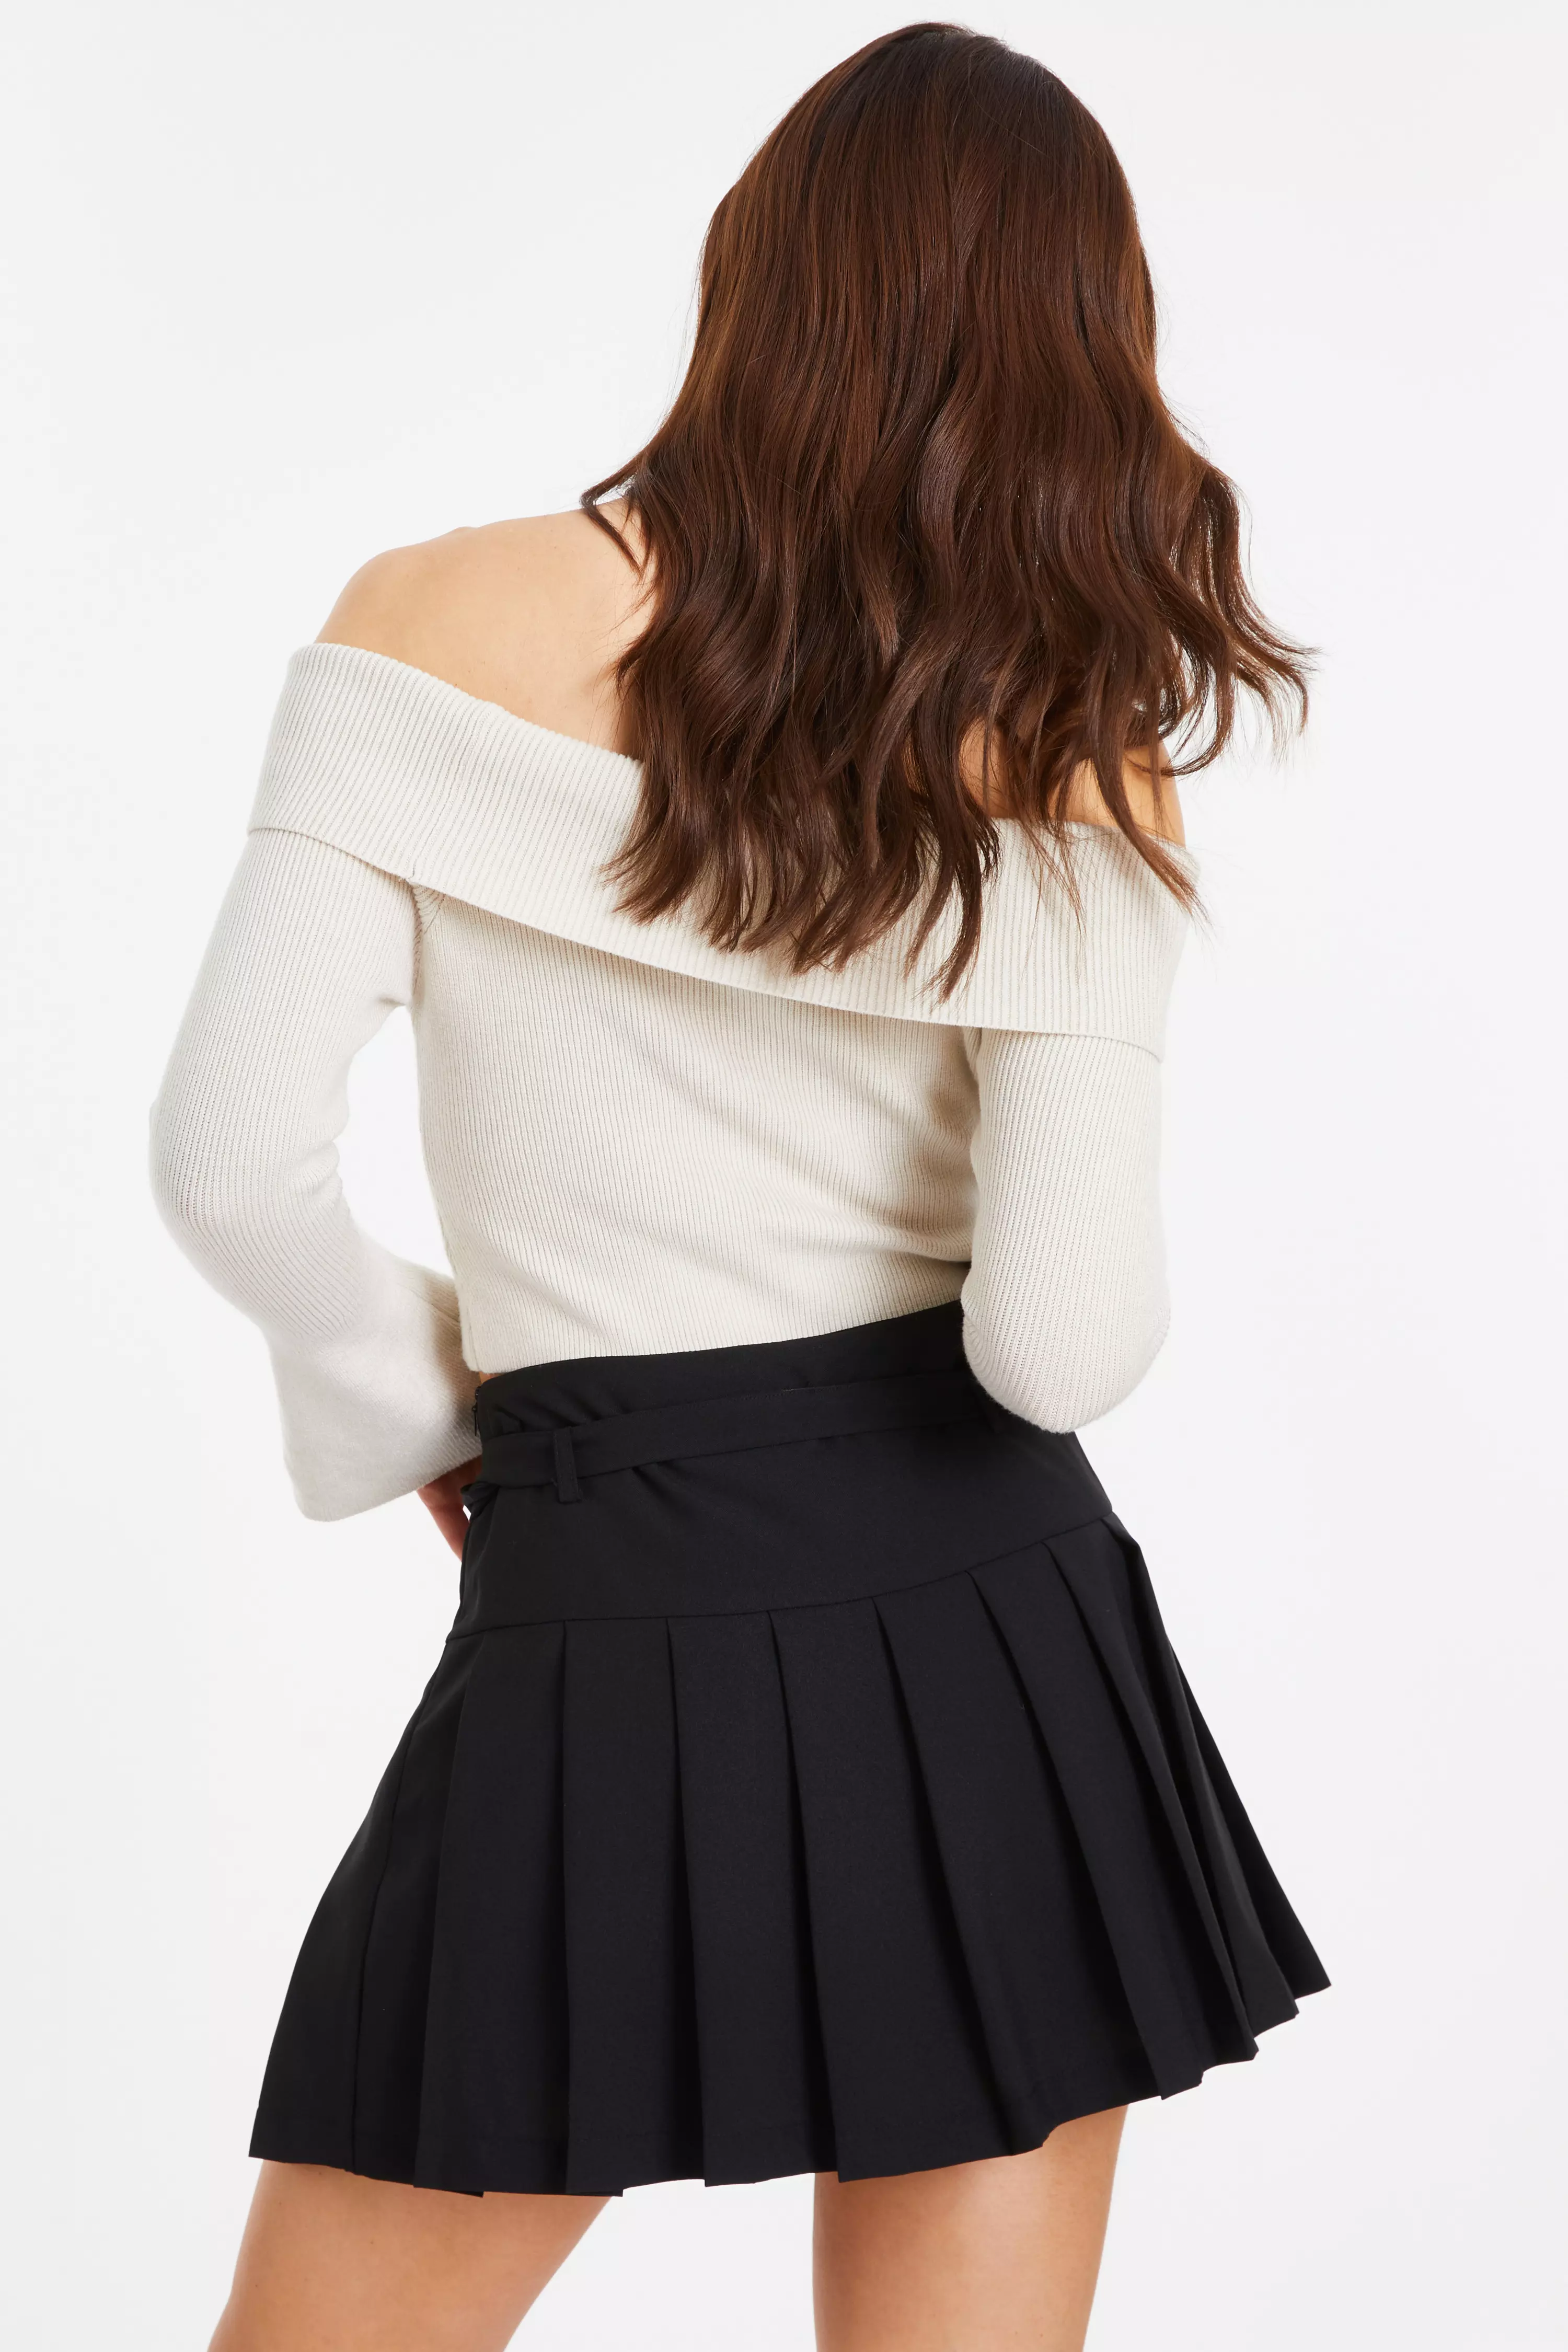 Black Pleated Mini Skirt - QUIZ Clothing